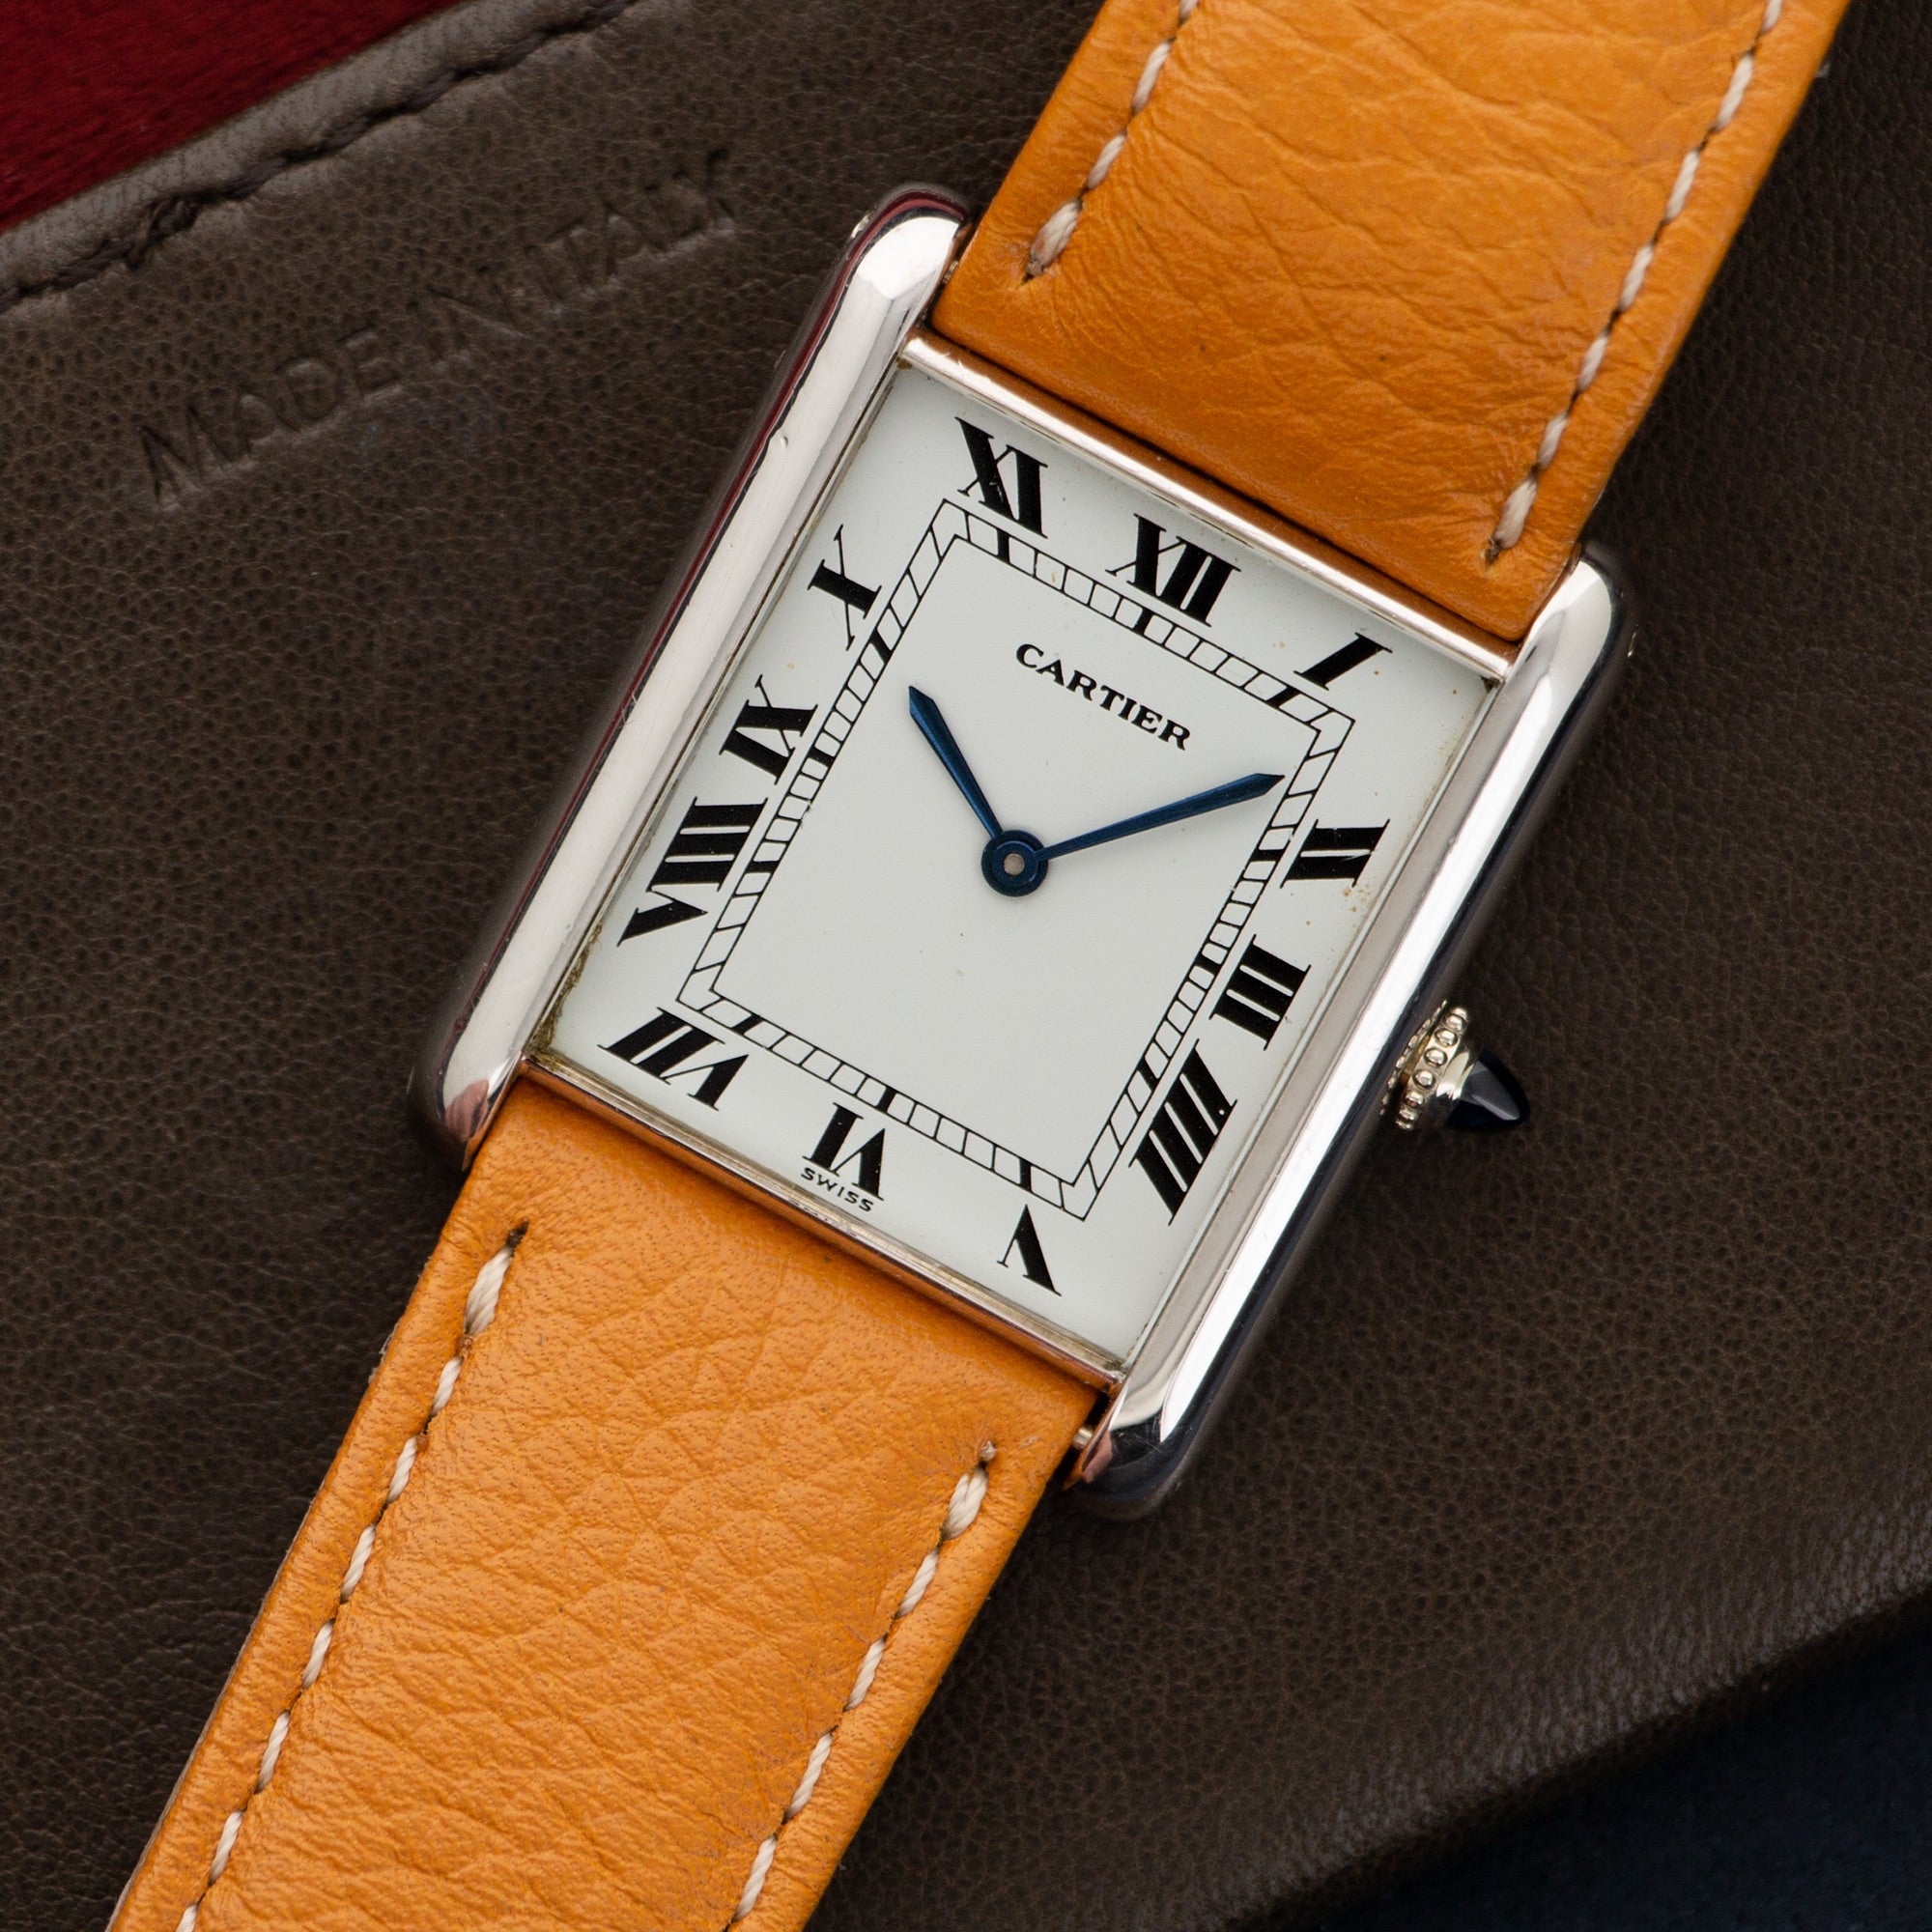 Cartier - Cartier White Gold Tank XL Automatique Watch - The Keystone Watches